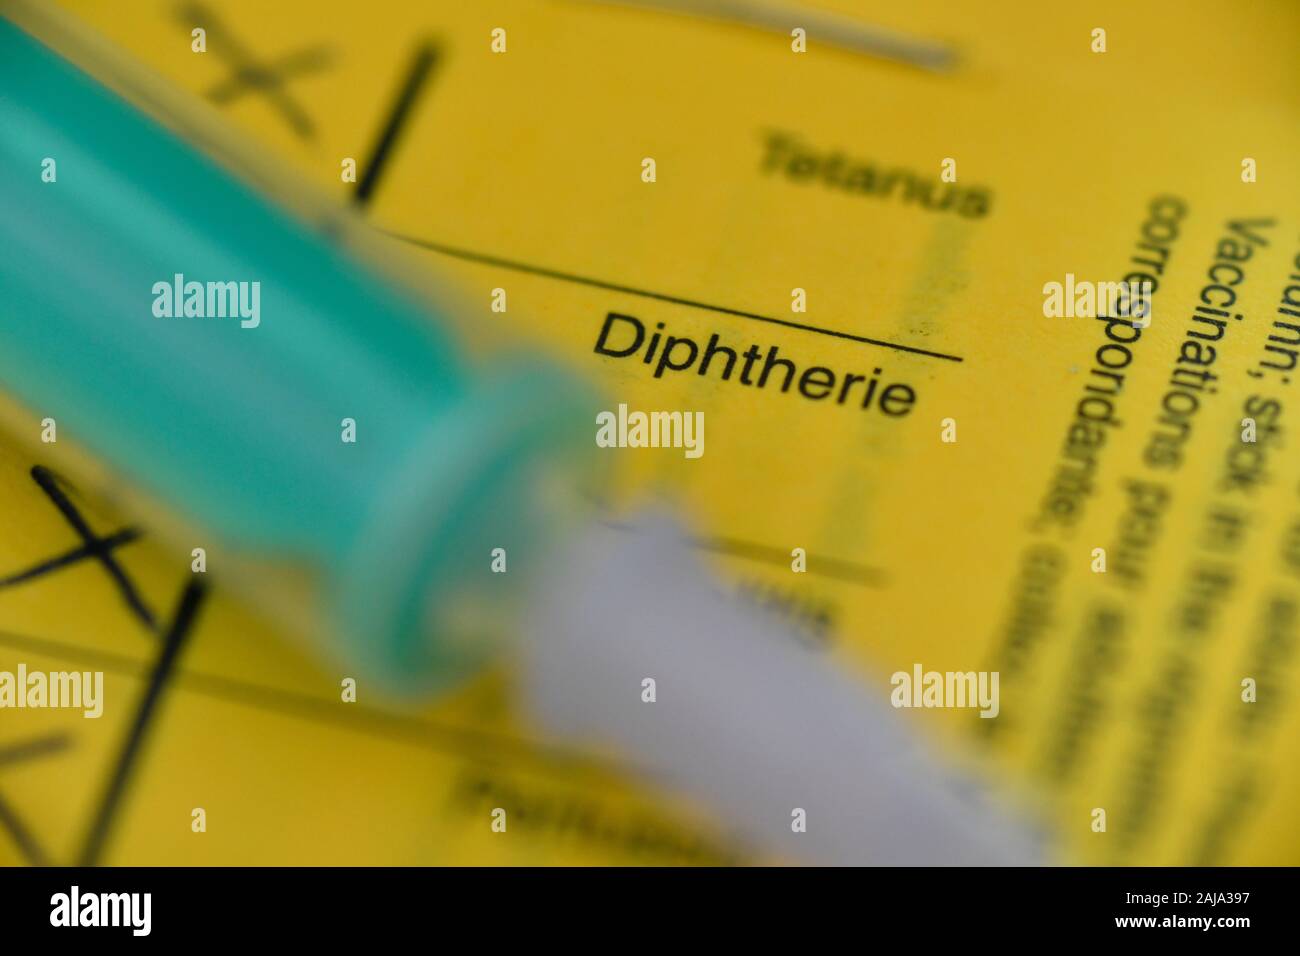 Diphterie, Impfbuch, Symbolfoto Impfung Stock Photo